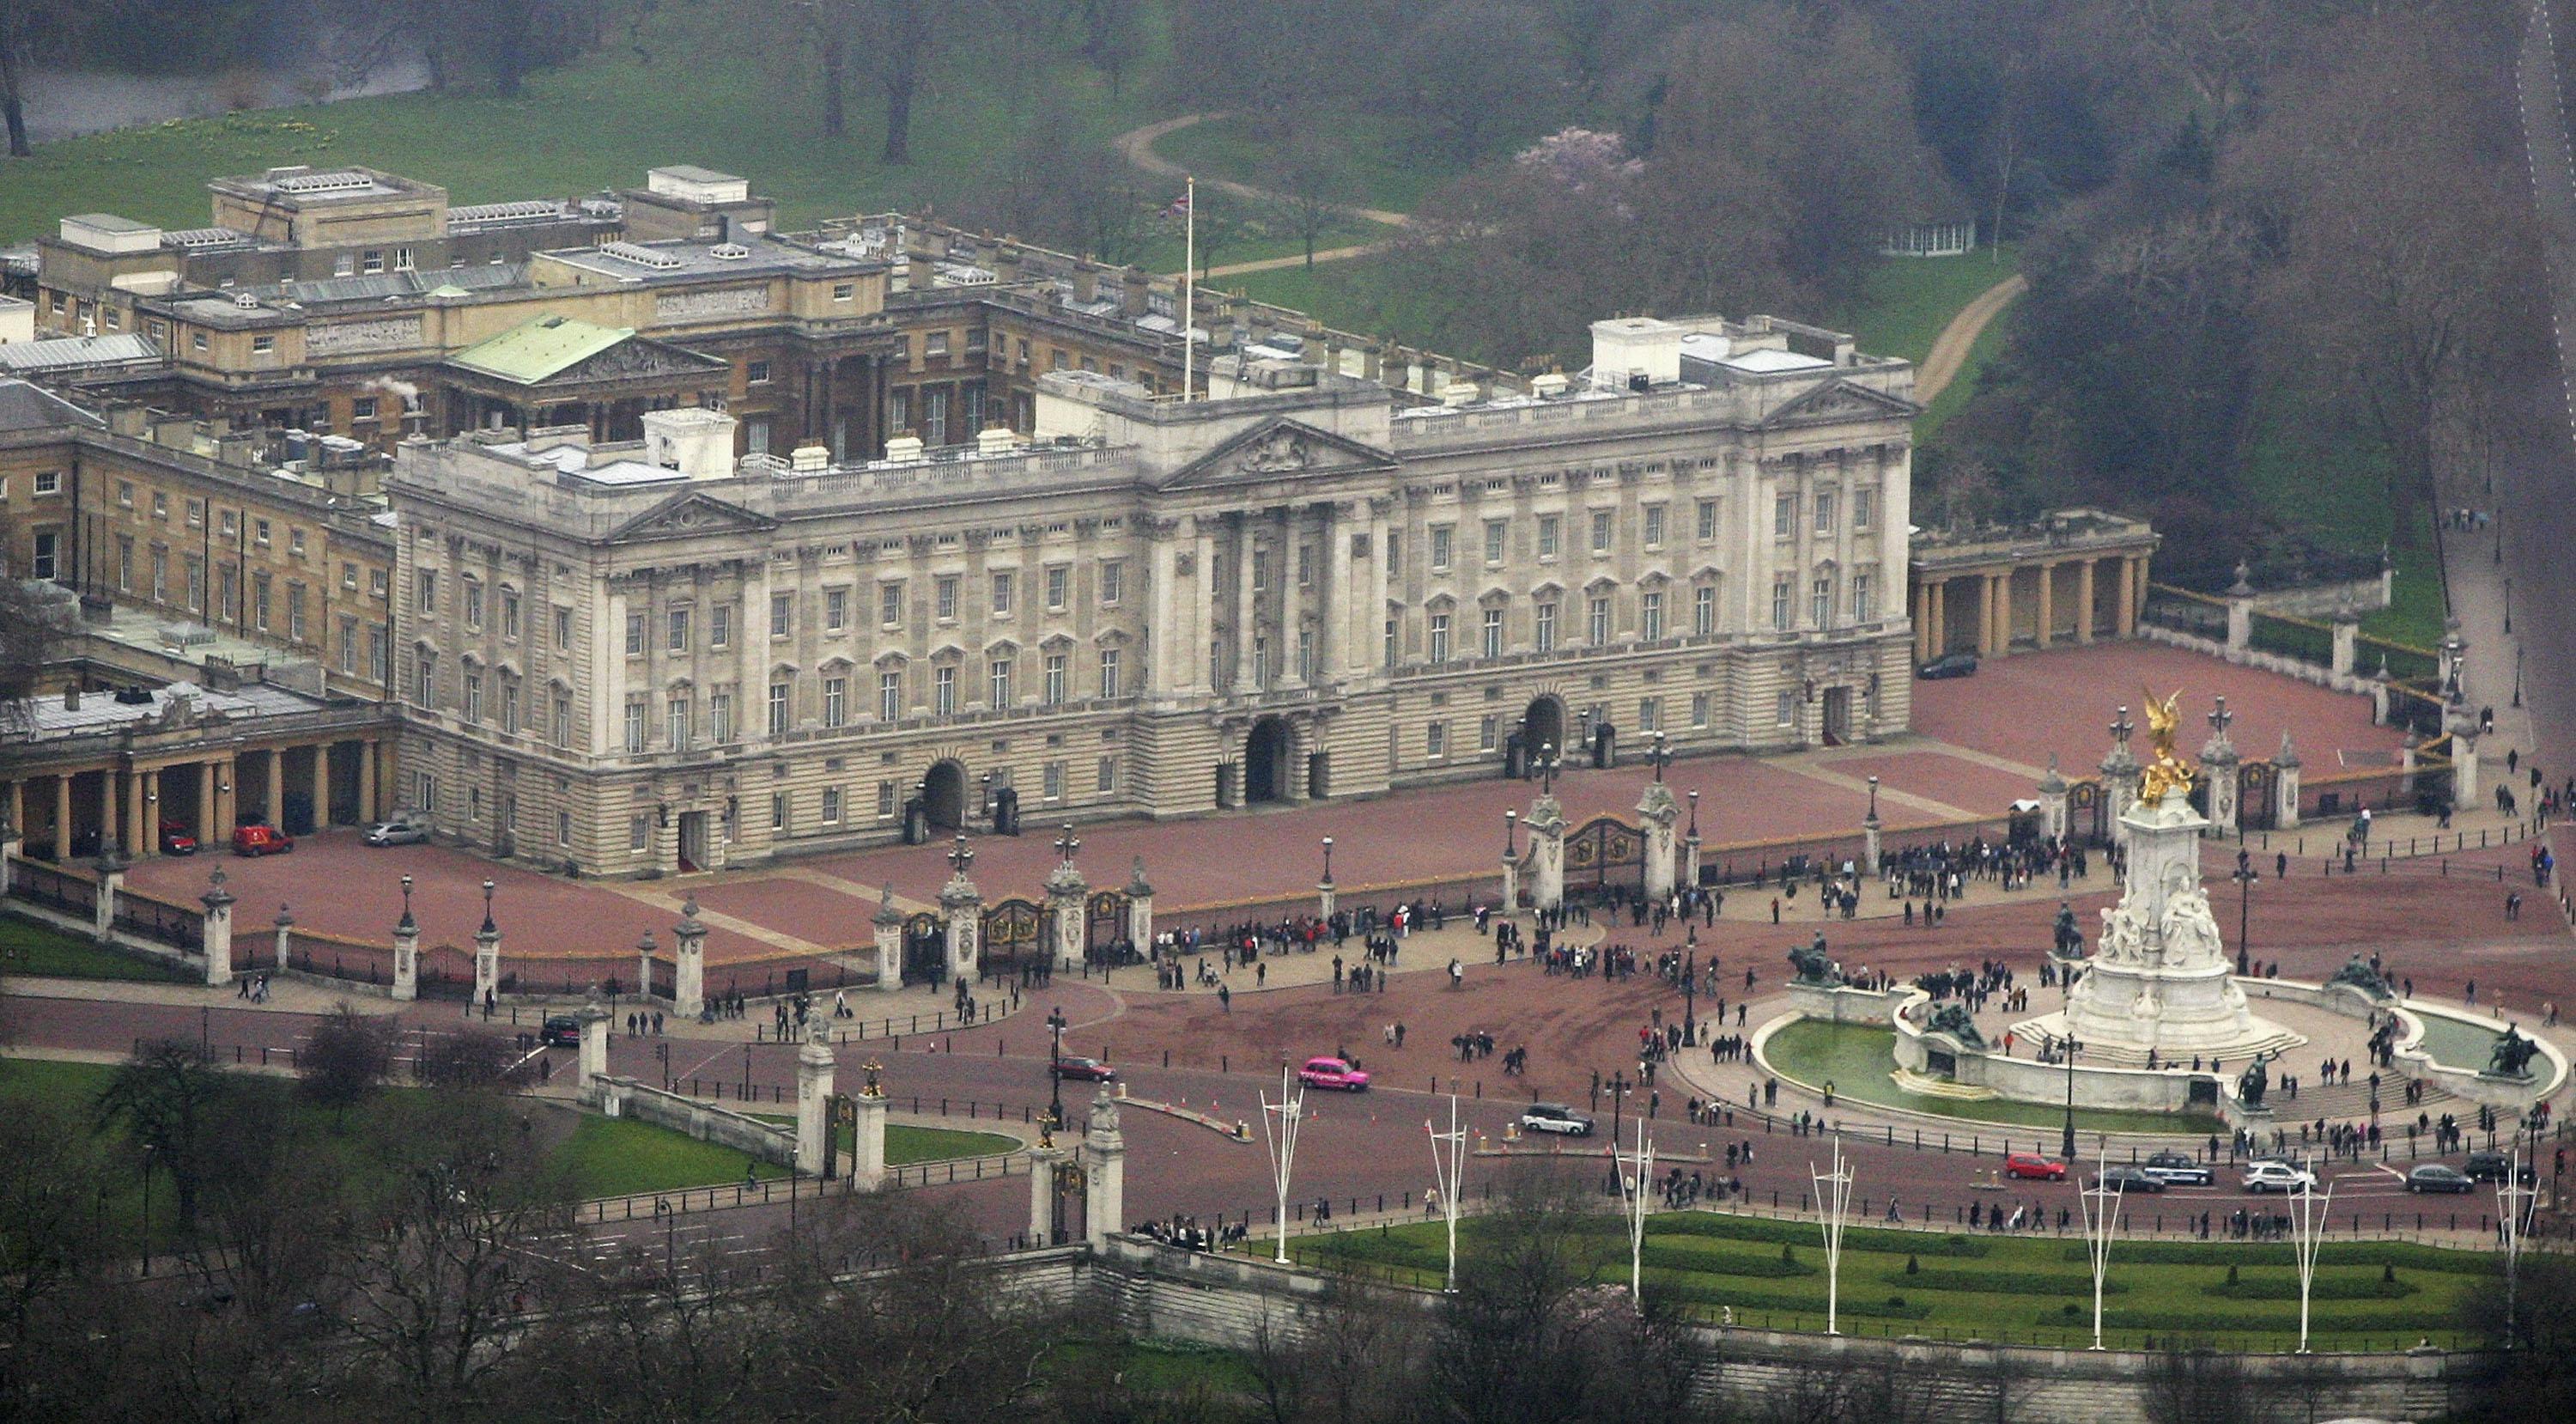 Buckingham Palace Aerial View